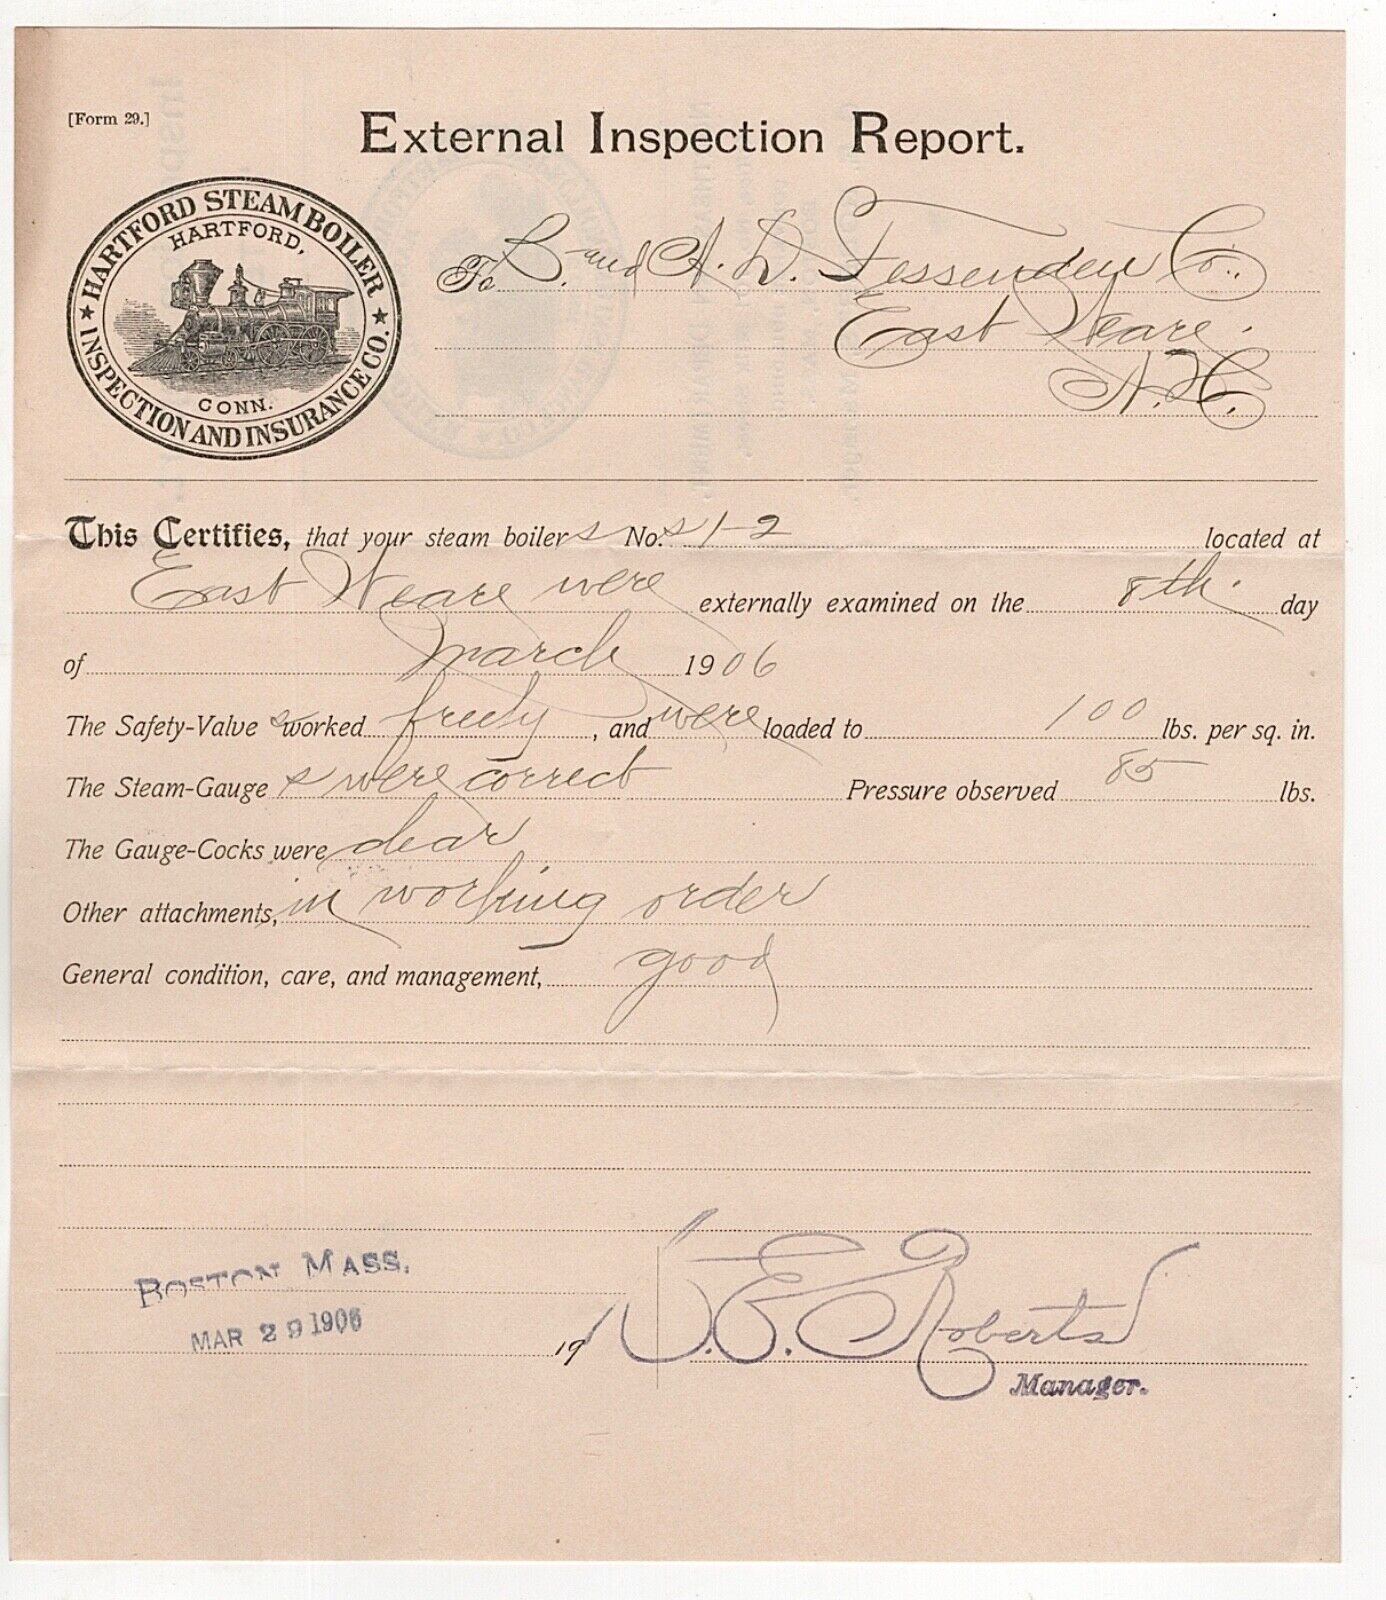 1906 HARTFORD STEAM BOILER CERTIFICATE EXTERNAL INSPECTION REPORT CT FESSENDEN